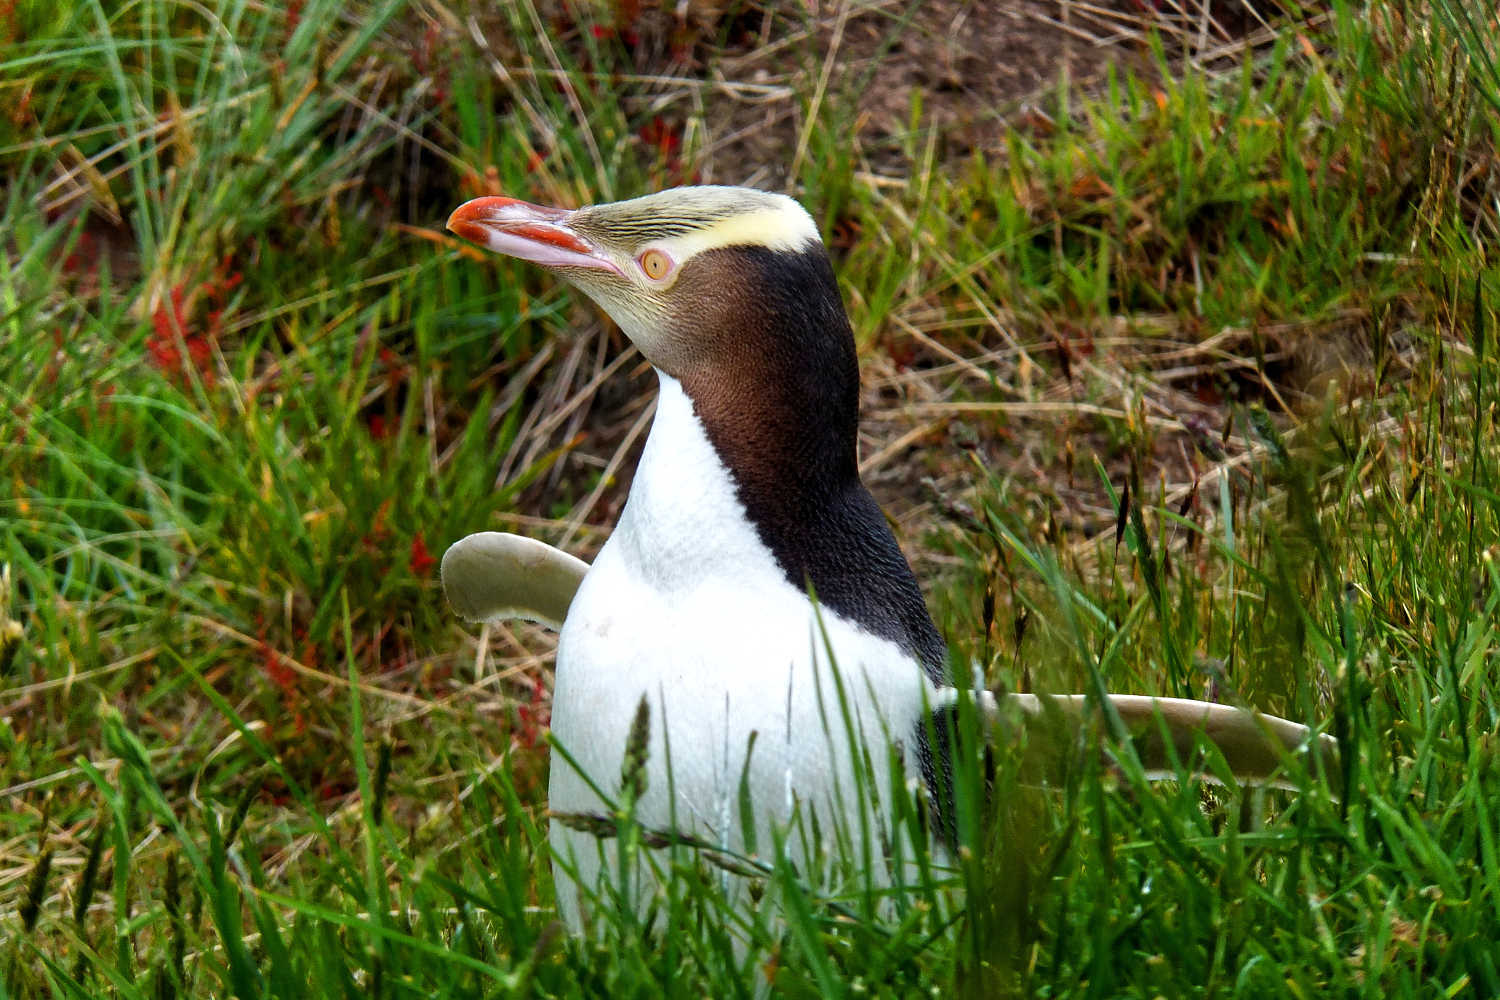 Yellow-eyed penguin in long grass. Wildlife sanctuary. Dunedin. New Zealand.